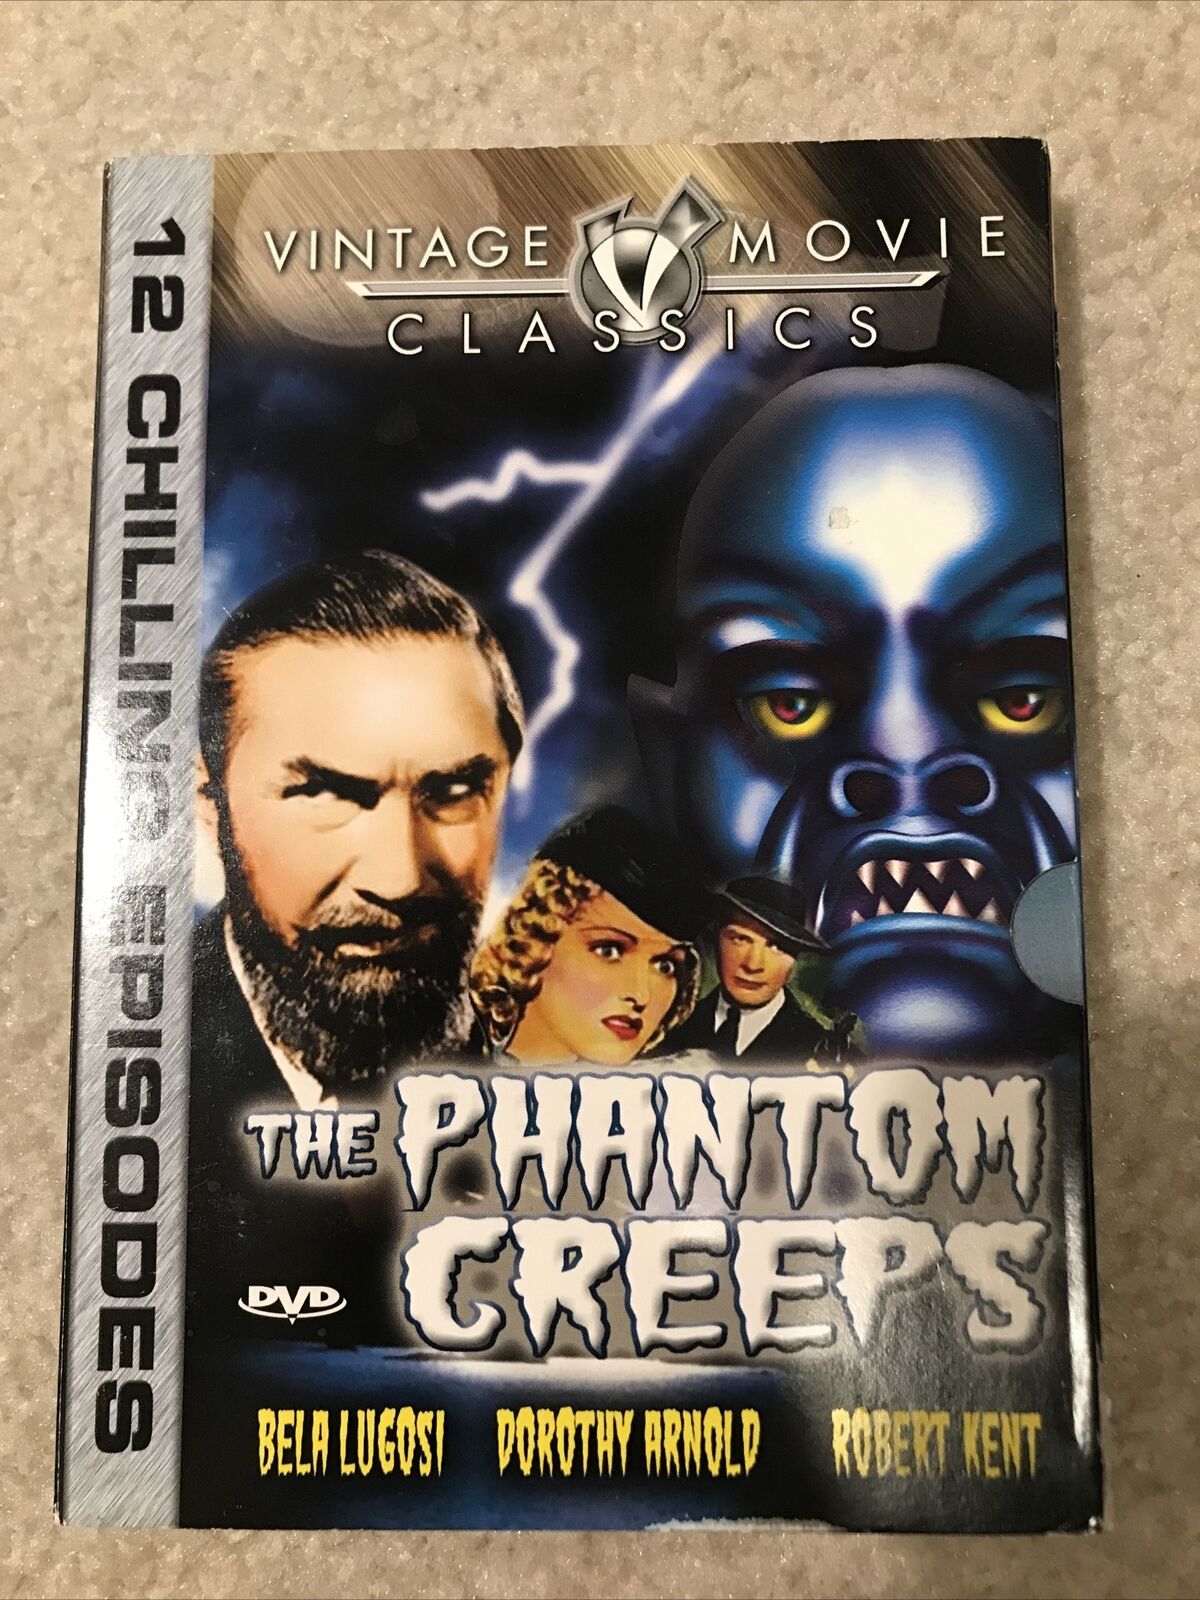 The Phantom Creeps DVD Vintage Movie Classic 12 Episodes Collectors Edition NEW